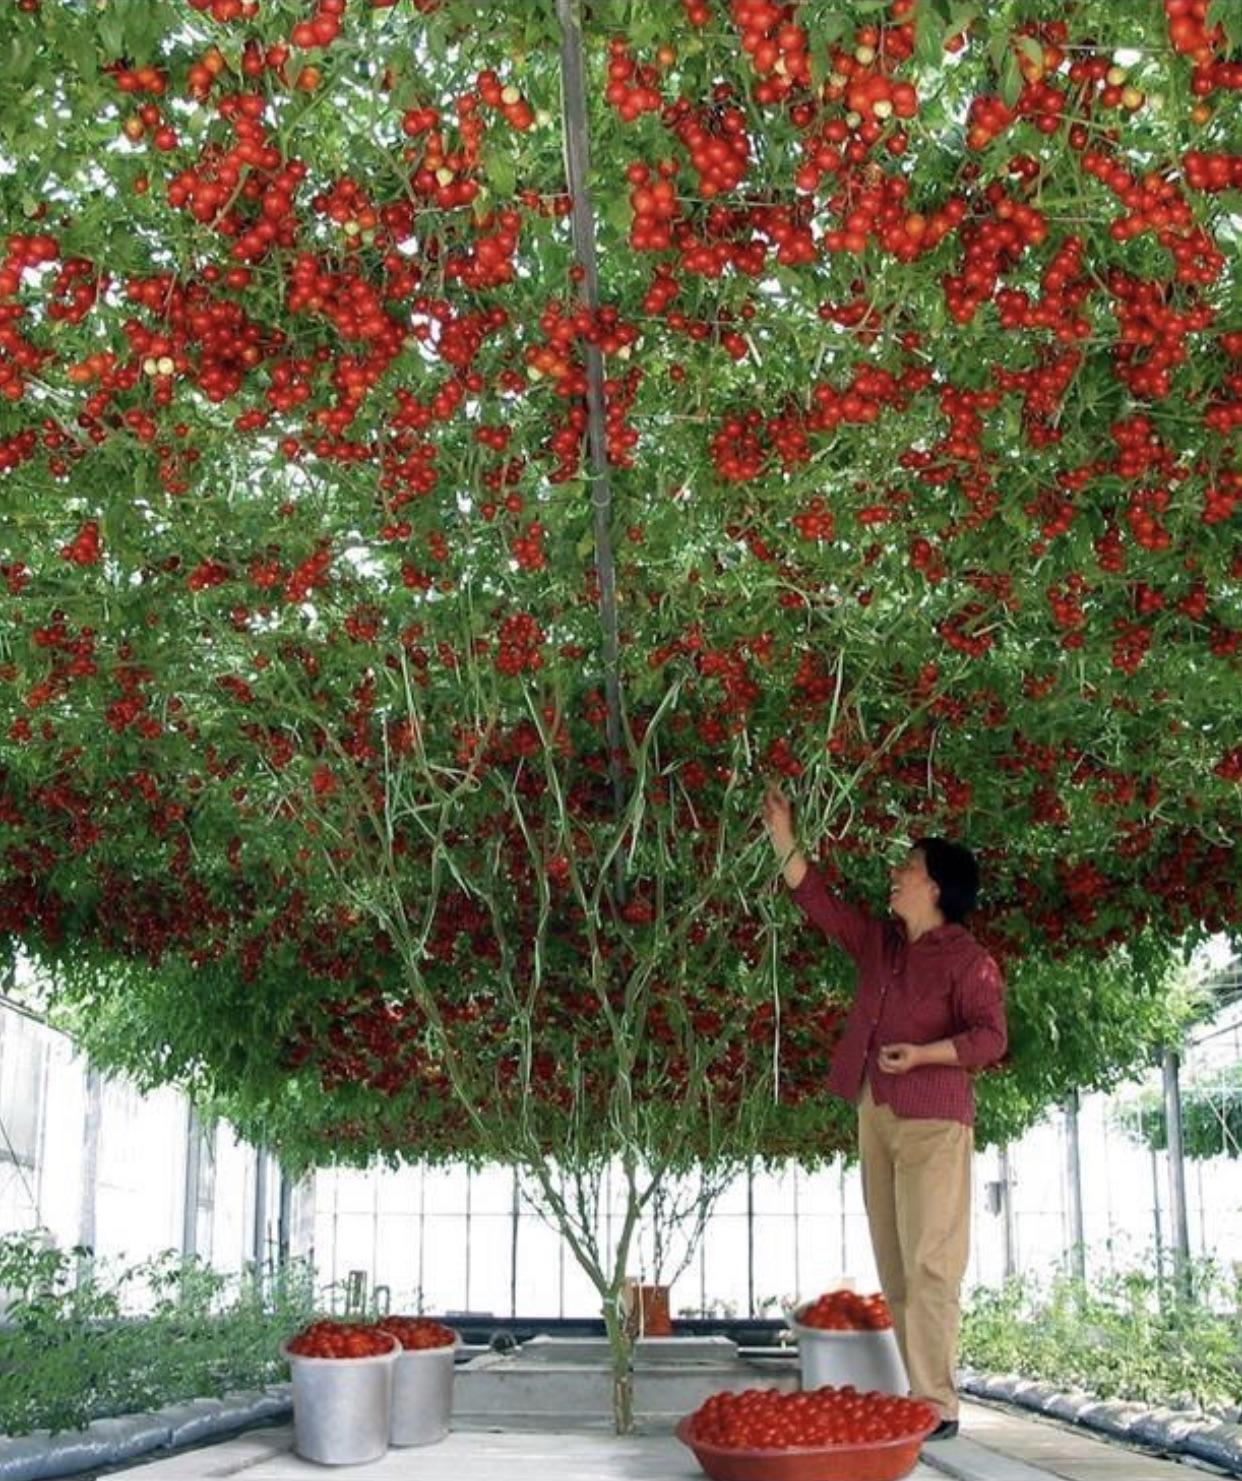 A very bountiful tomato plant.